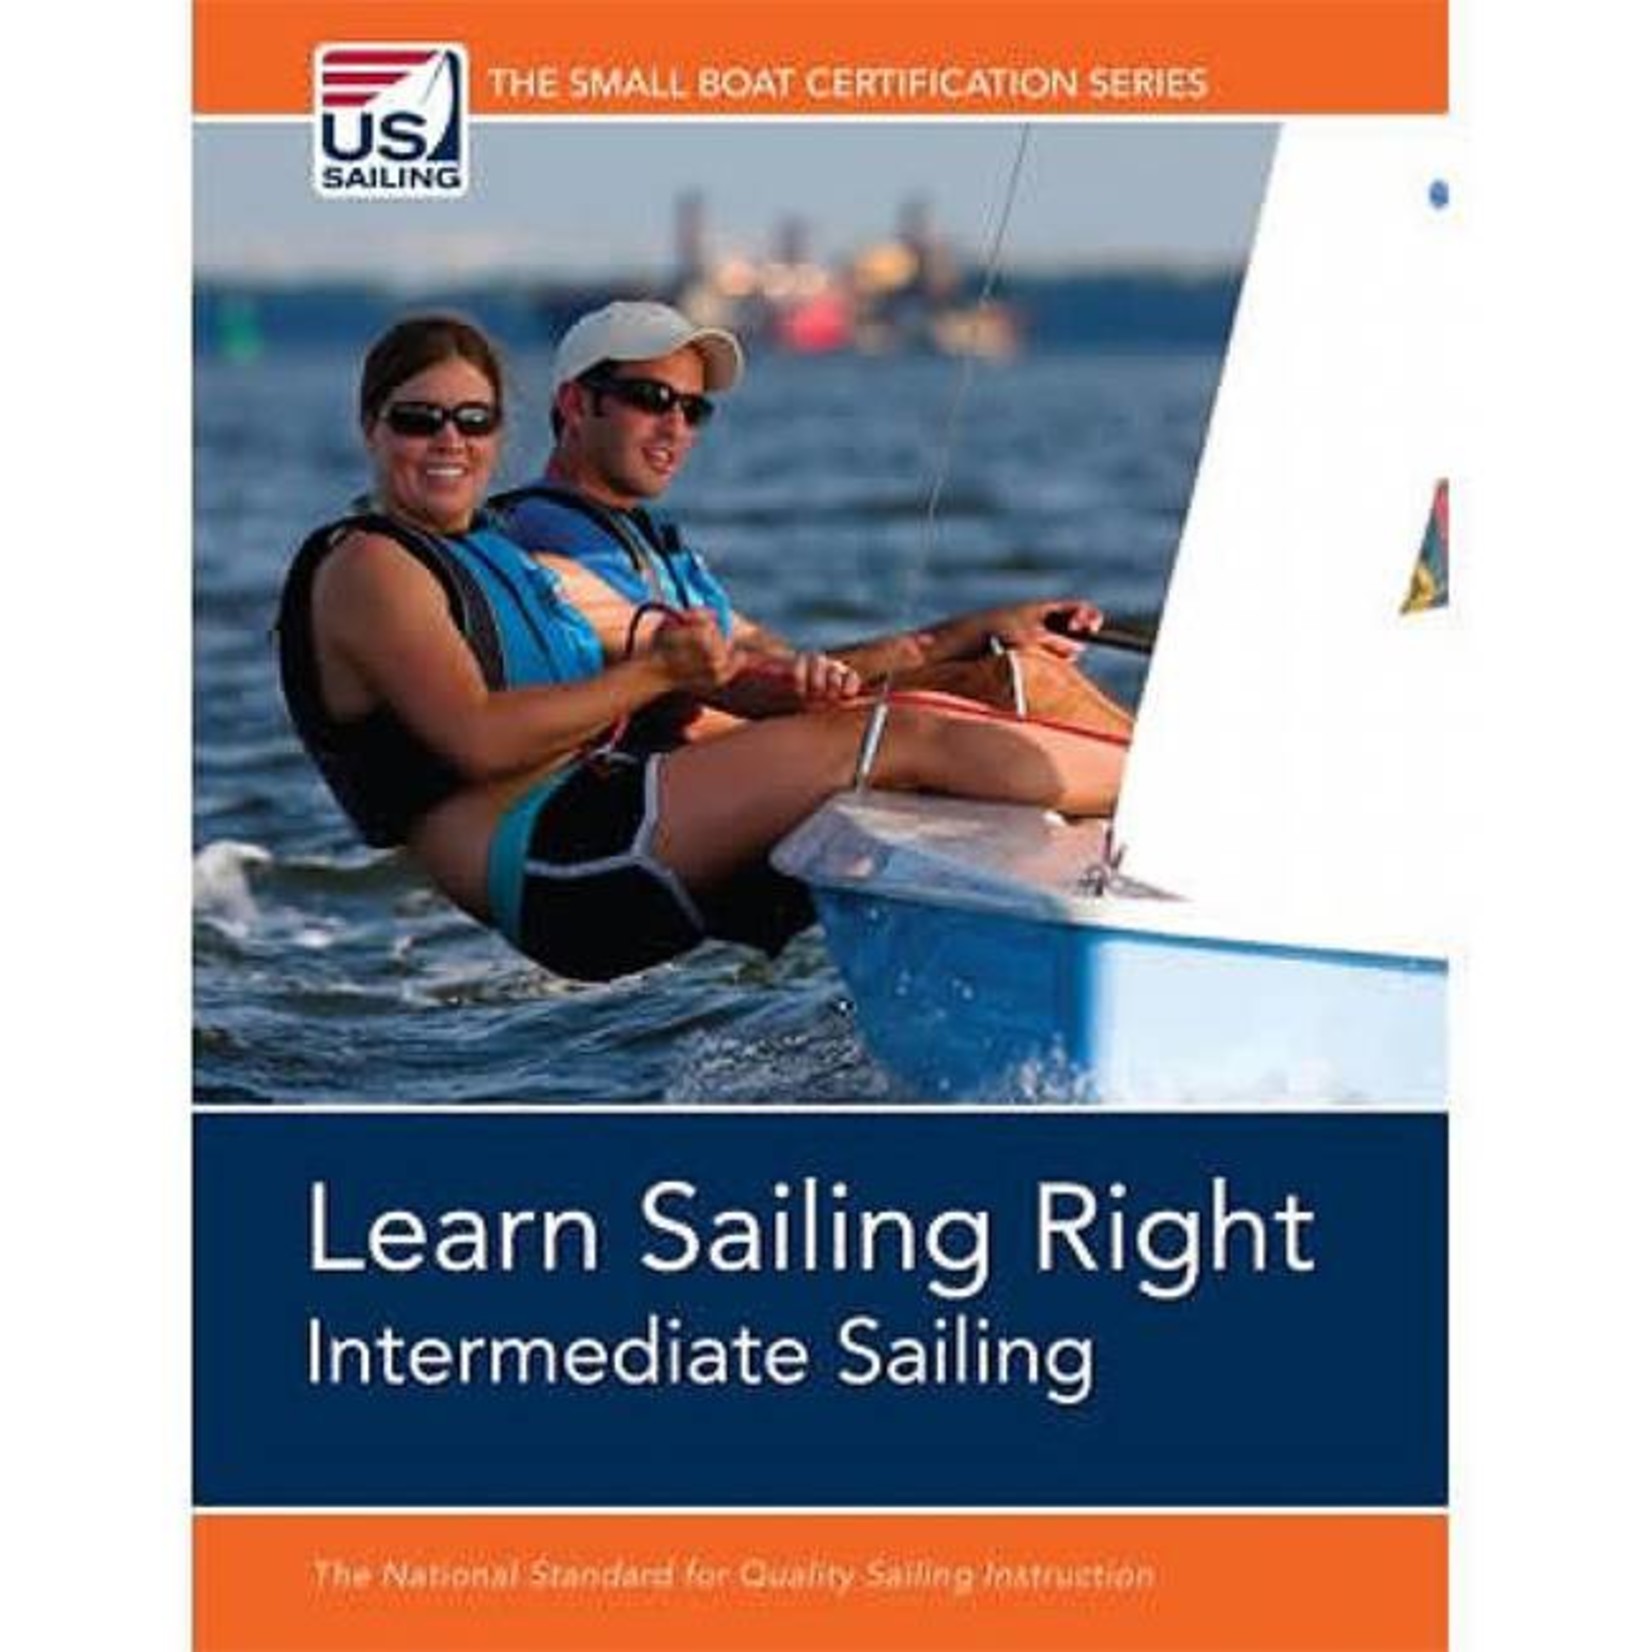 TEXT Learn Sailing Right – Intermediate